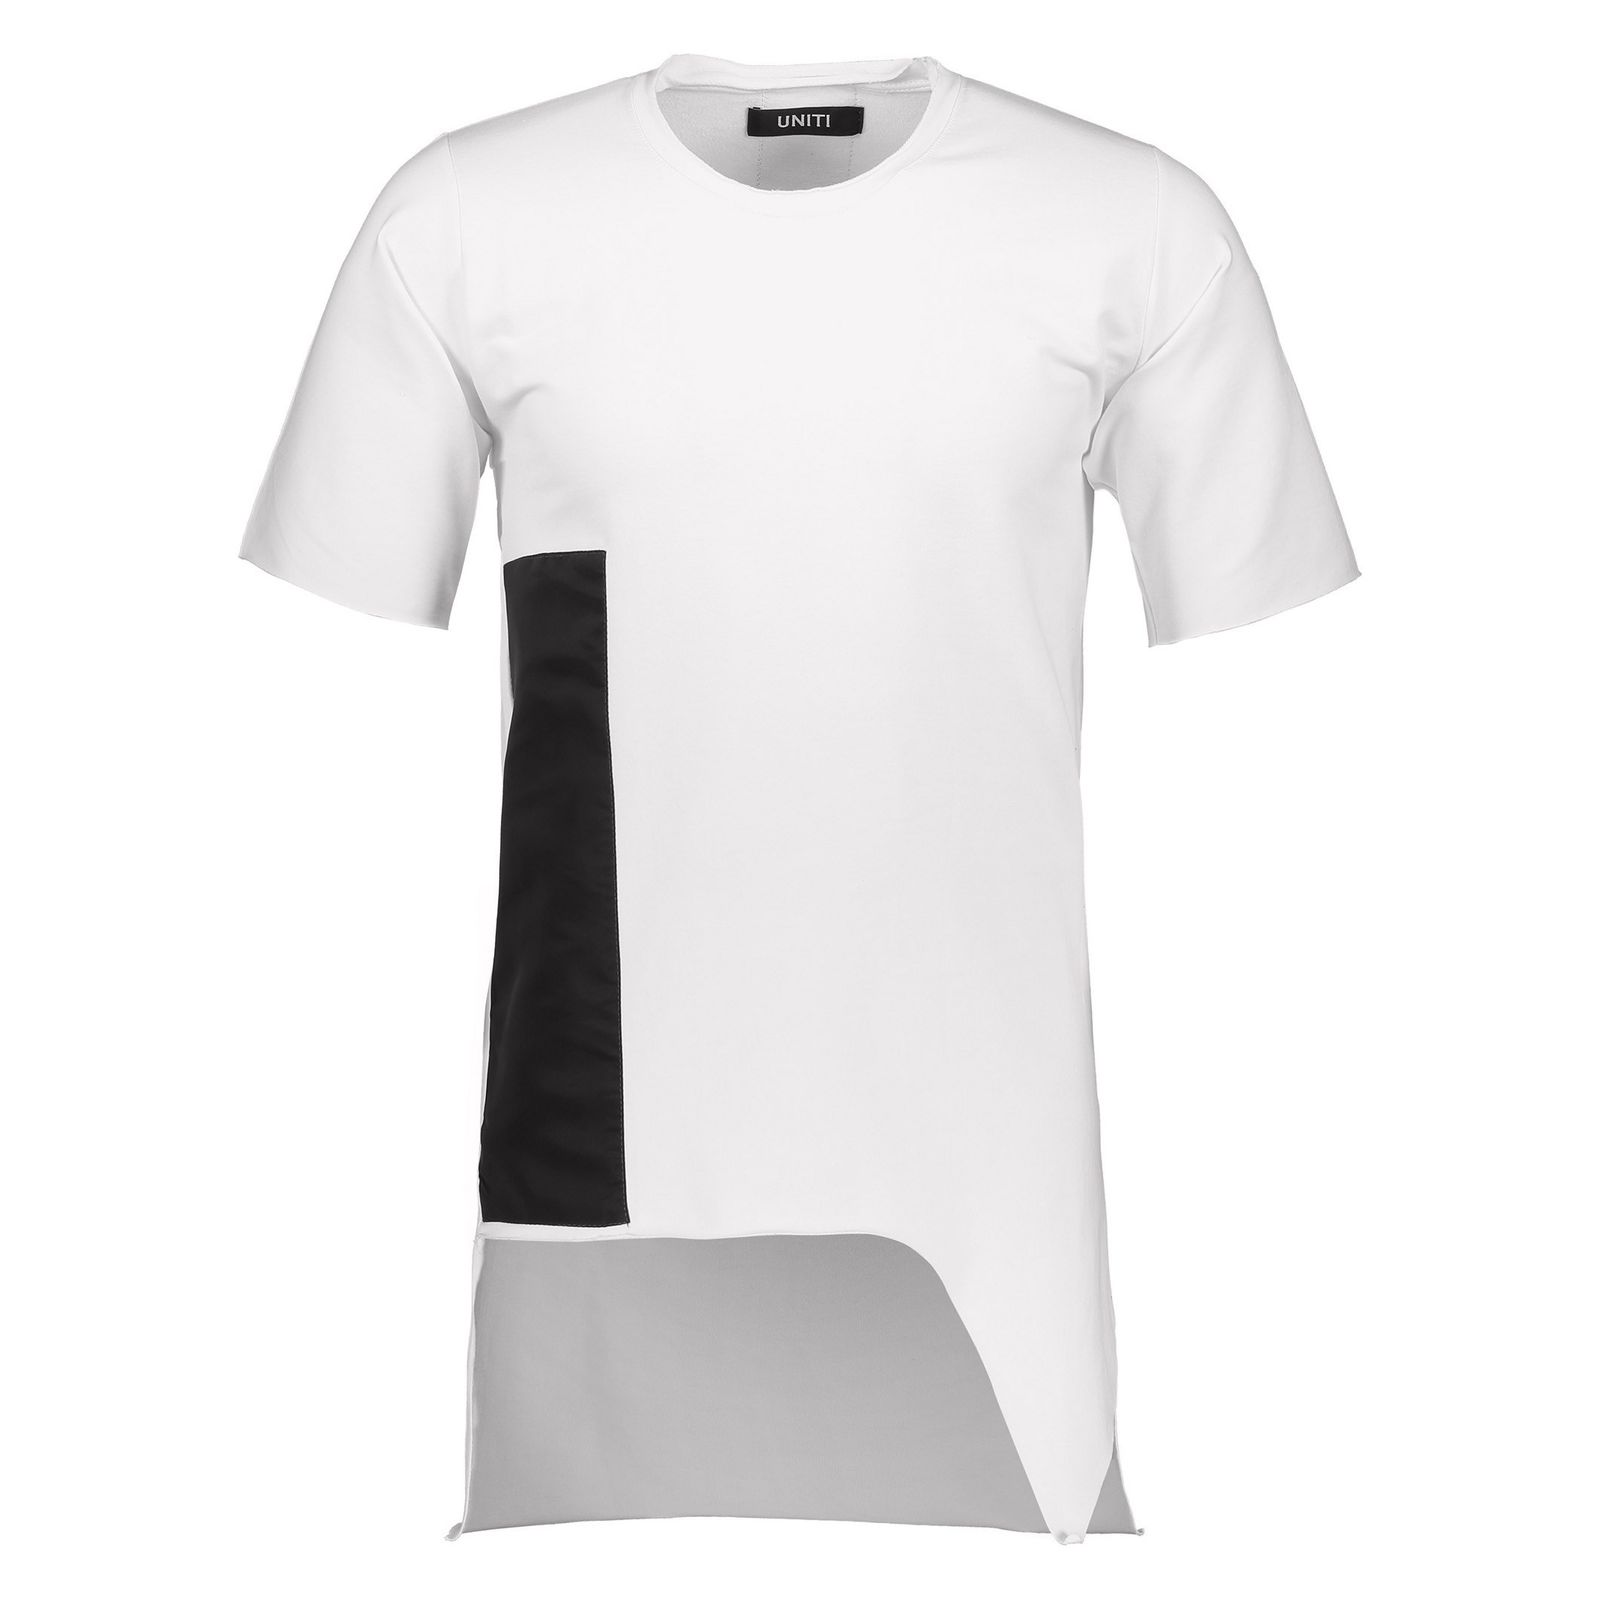 تی شرت ویسکوز یقه گرد مردانه Memory - یونیتی - سفيد - 2